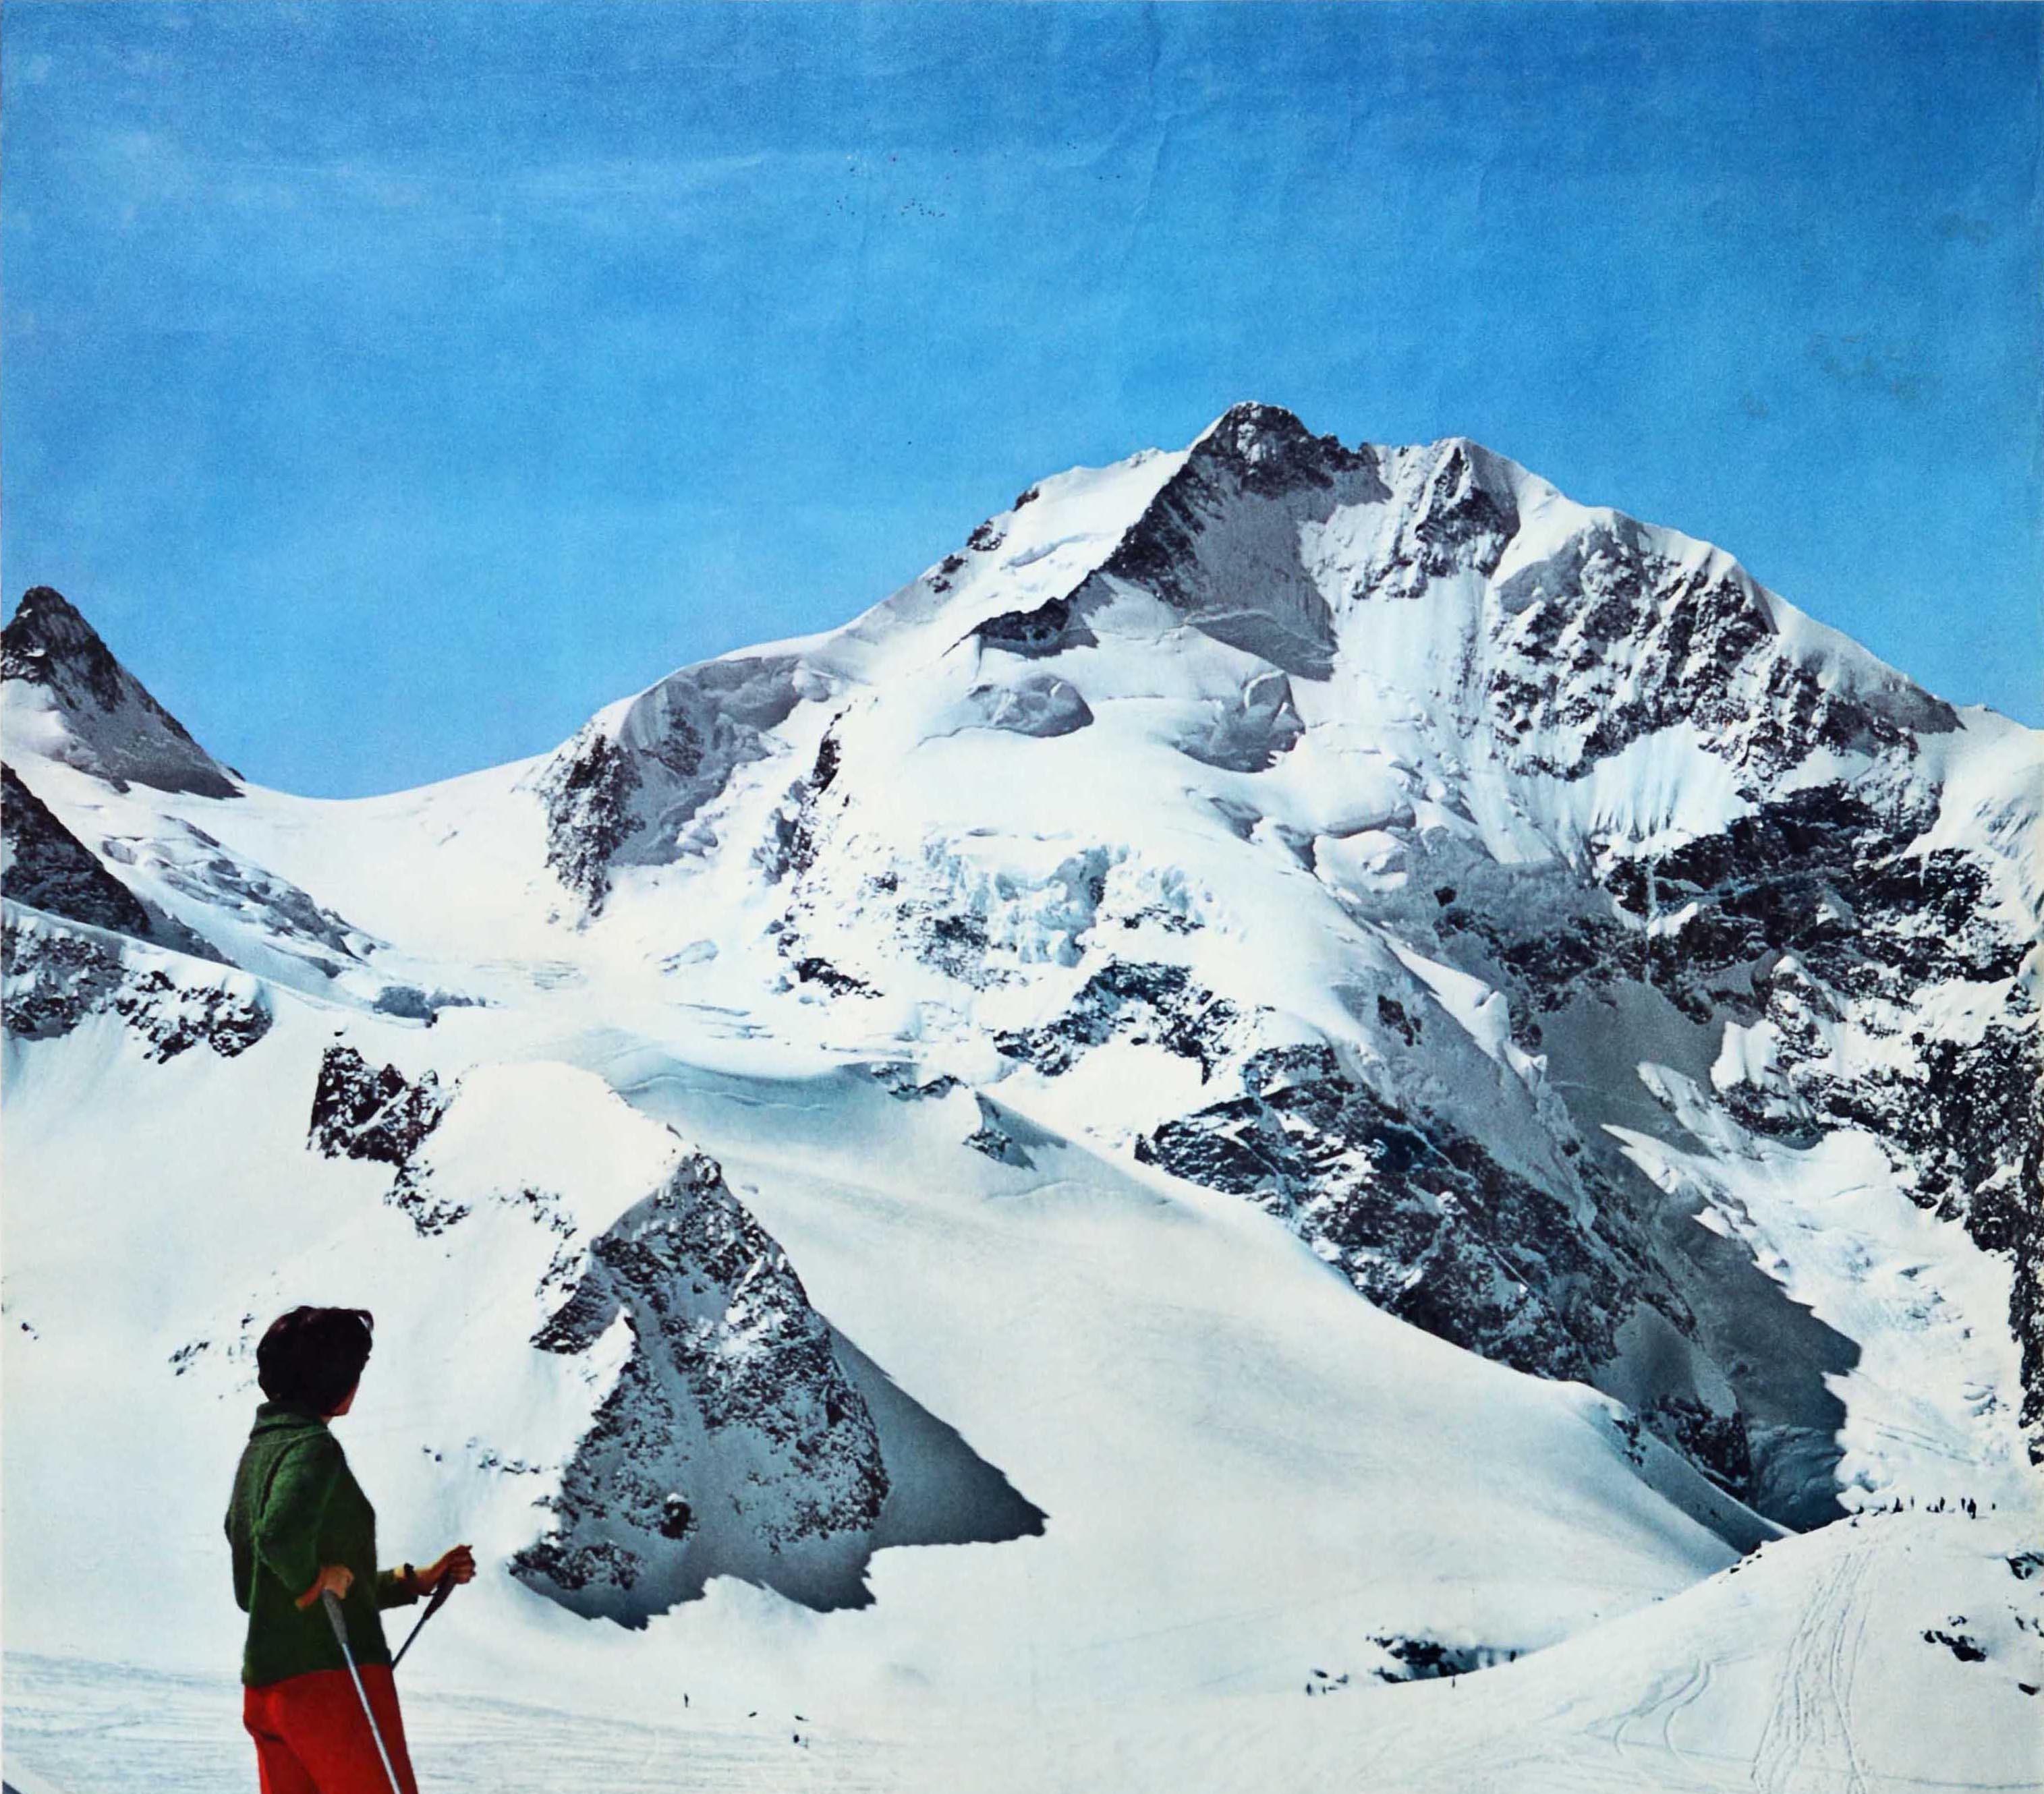 Original Vintage Skiing Poster Pontresina Switzerland Winter Sport Swiss Alps - Print by Jules Geiger